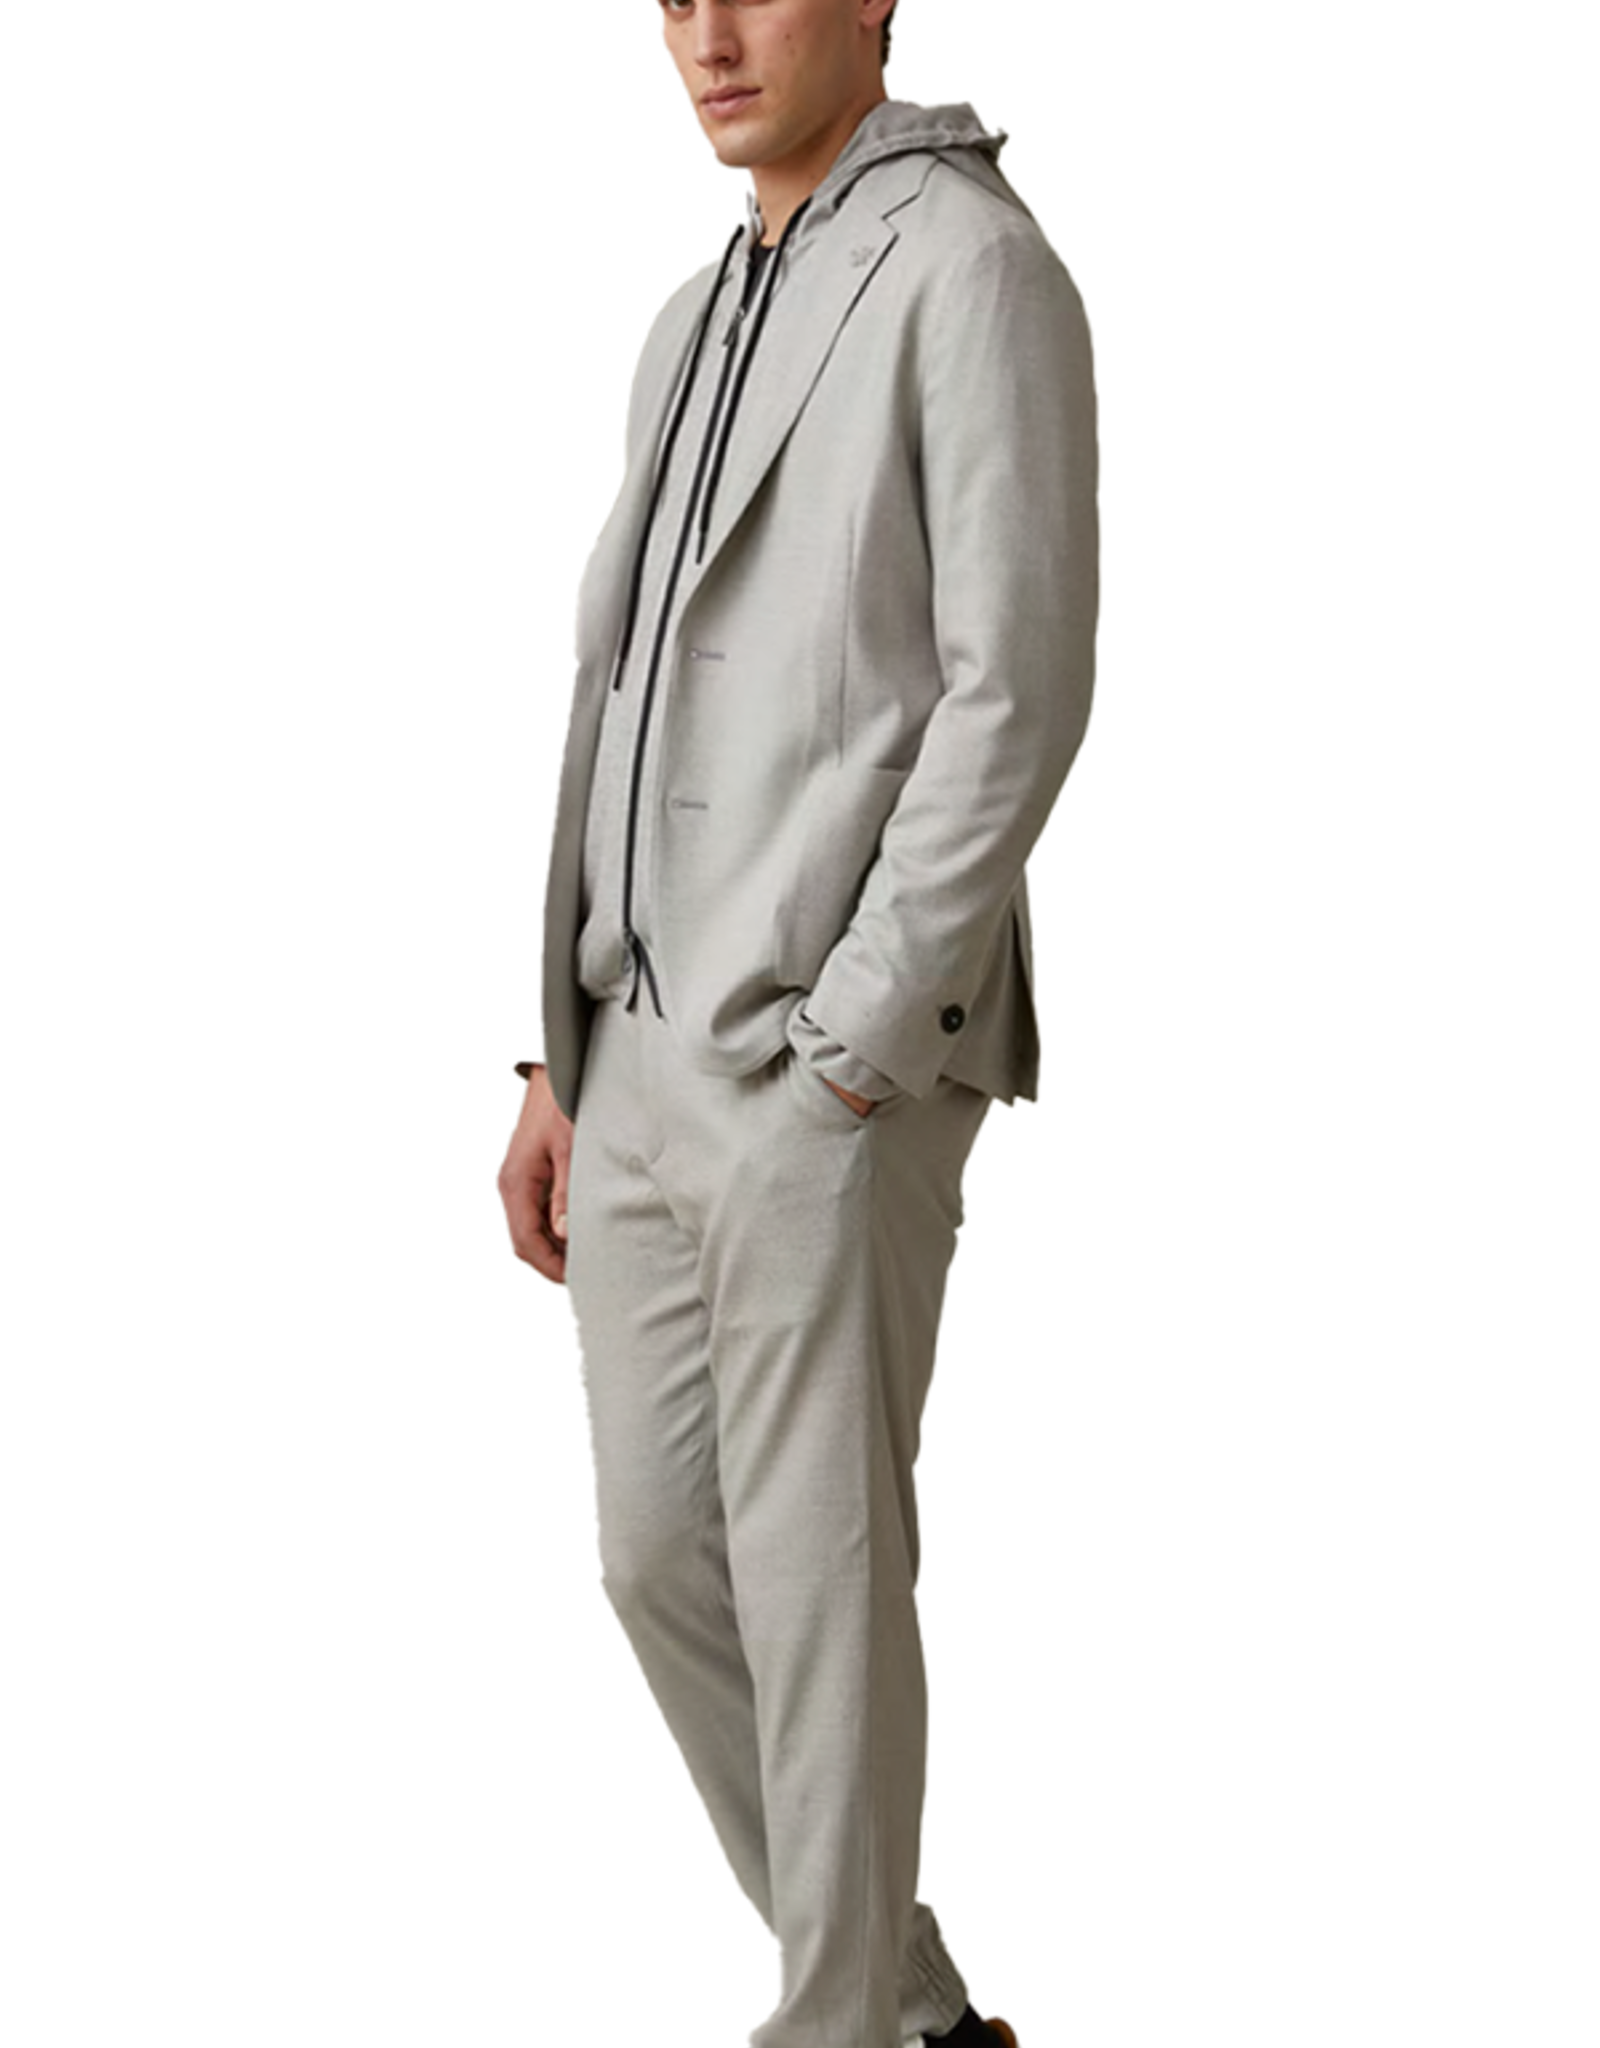 Tombolini Tombolini running suit trousers gray